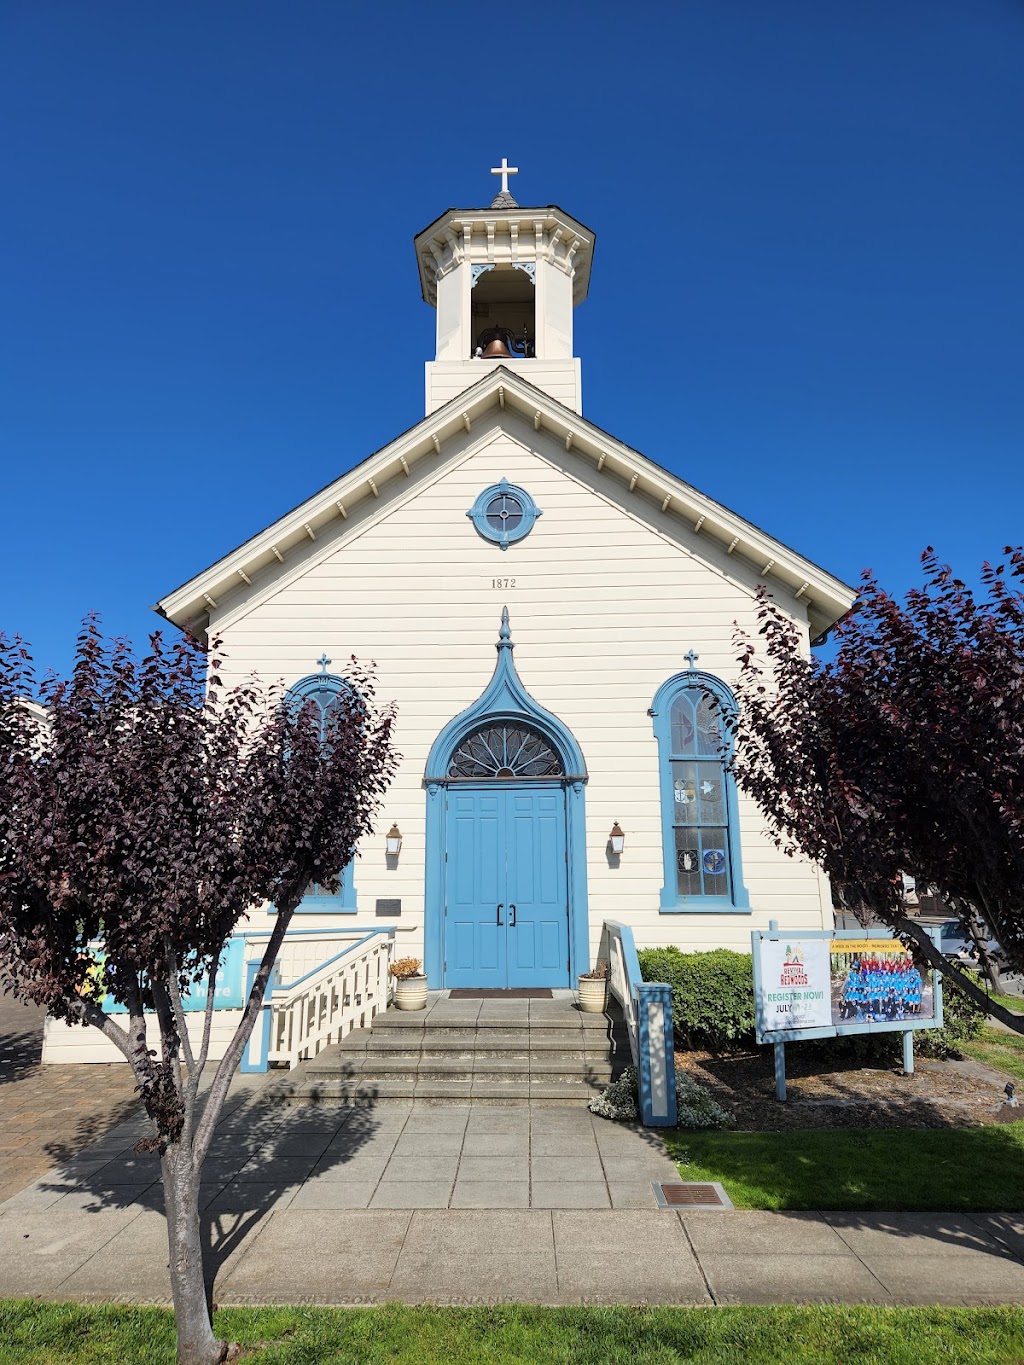 Community United Methodist Church | 777 Miramontes St, Half Moon Bay, CA 94019 | Phone: (650) 726-4621